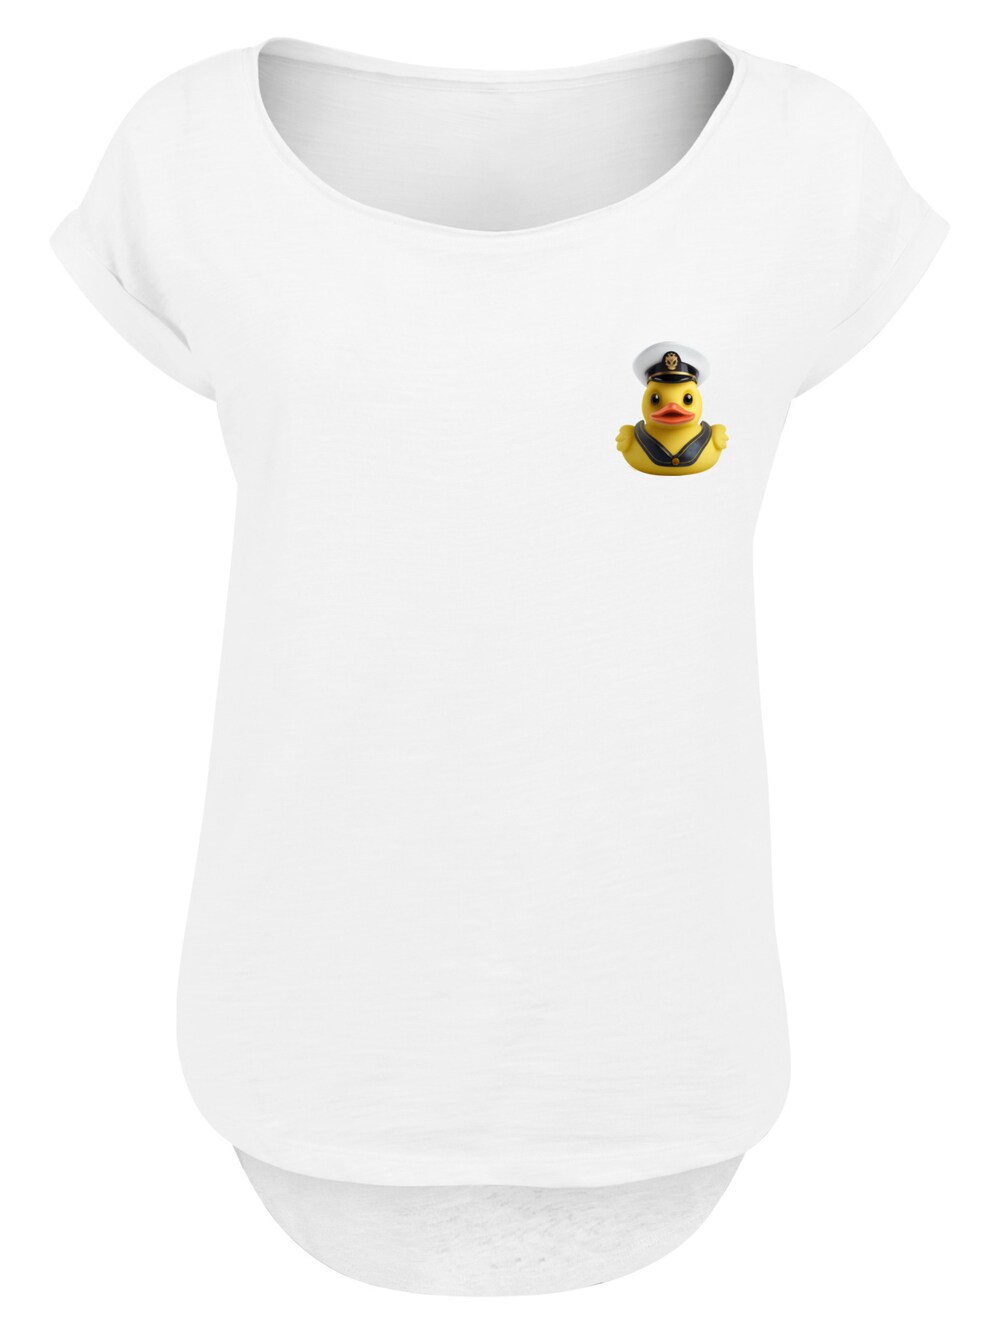 Рубашка F4Nt4Stic Rubber Duck Captain, белый